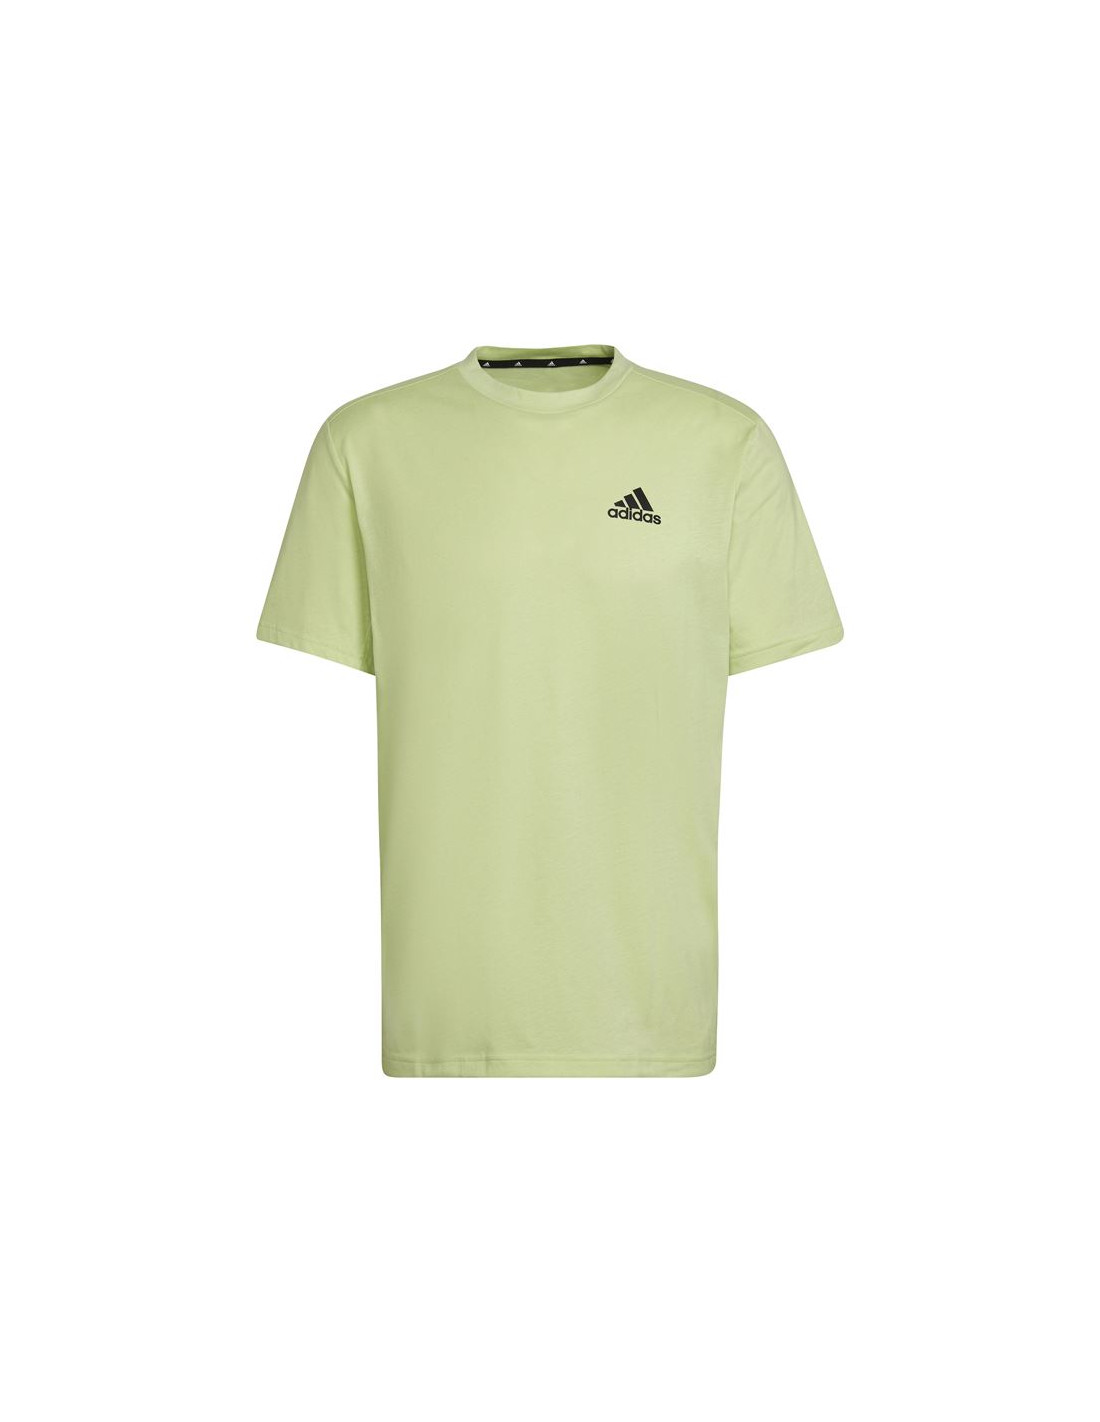 Camiseta adidas aeroready designed 2 move feelready sport m green